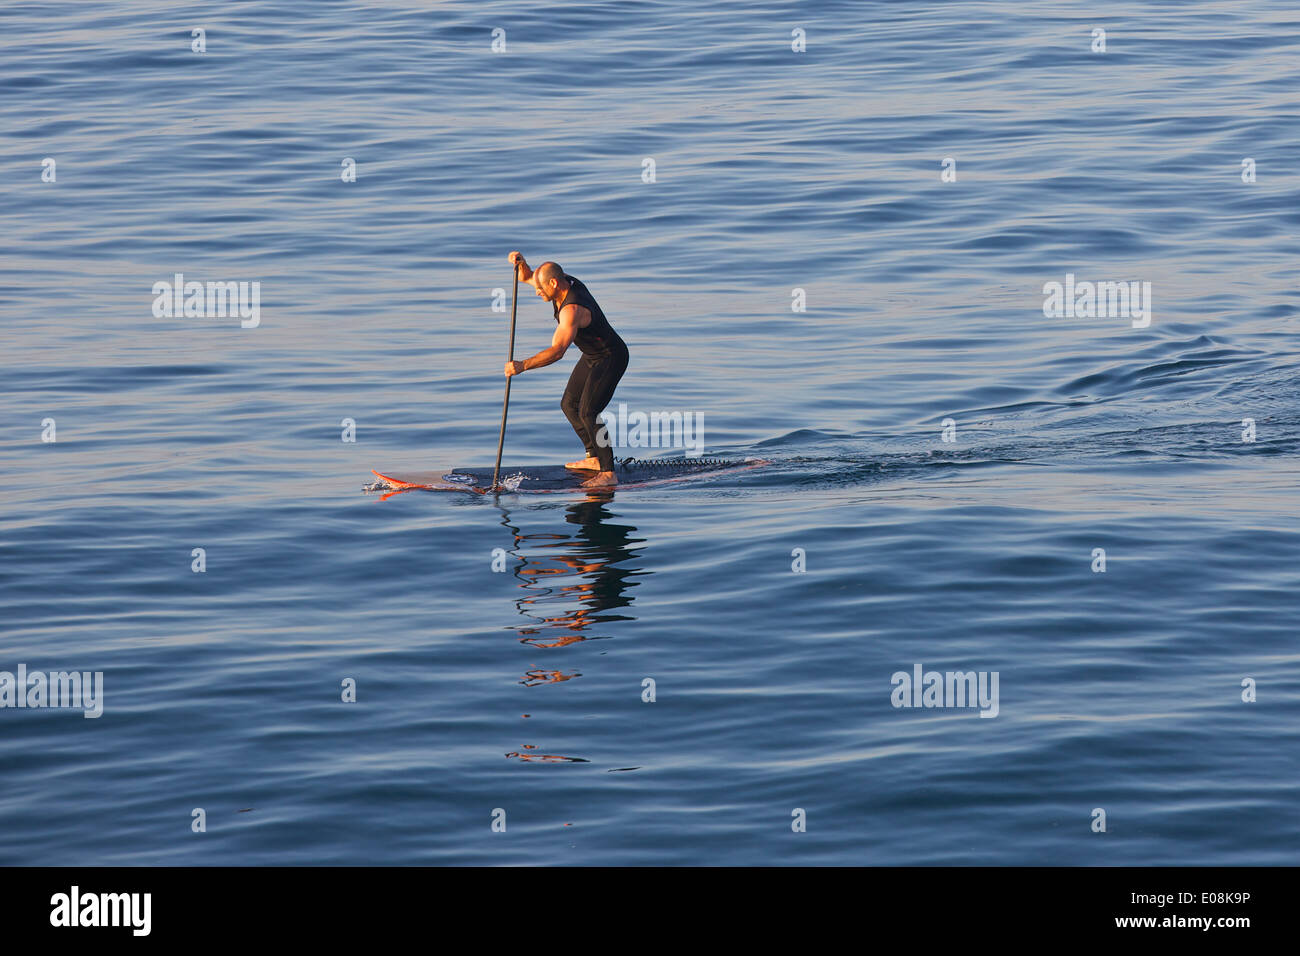 Paddle Board in the Pacific, Hermosa Beach, California. Stock Photo